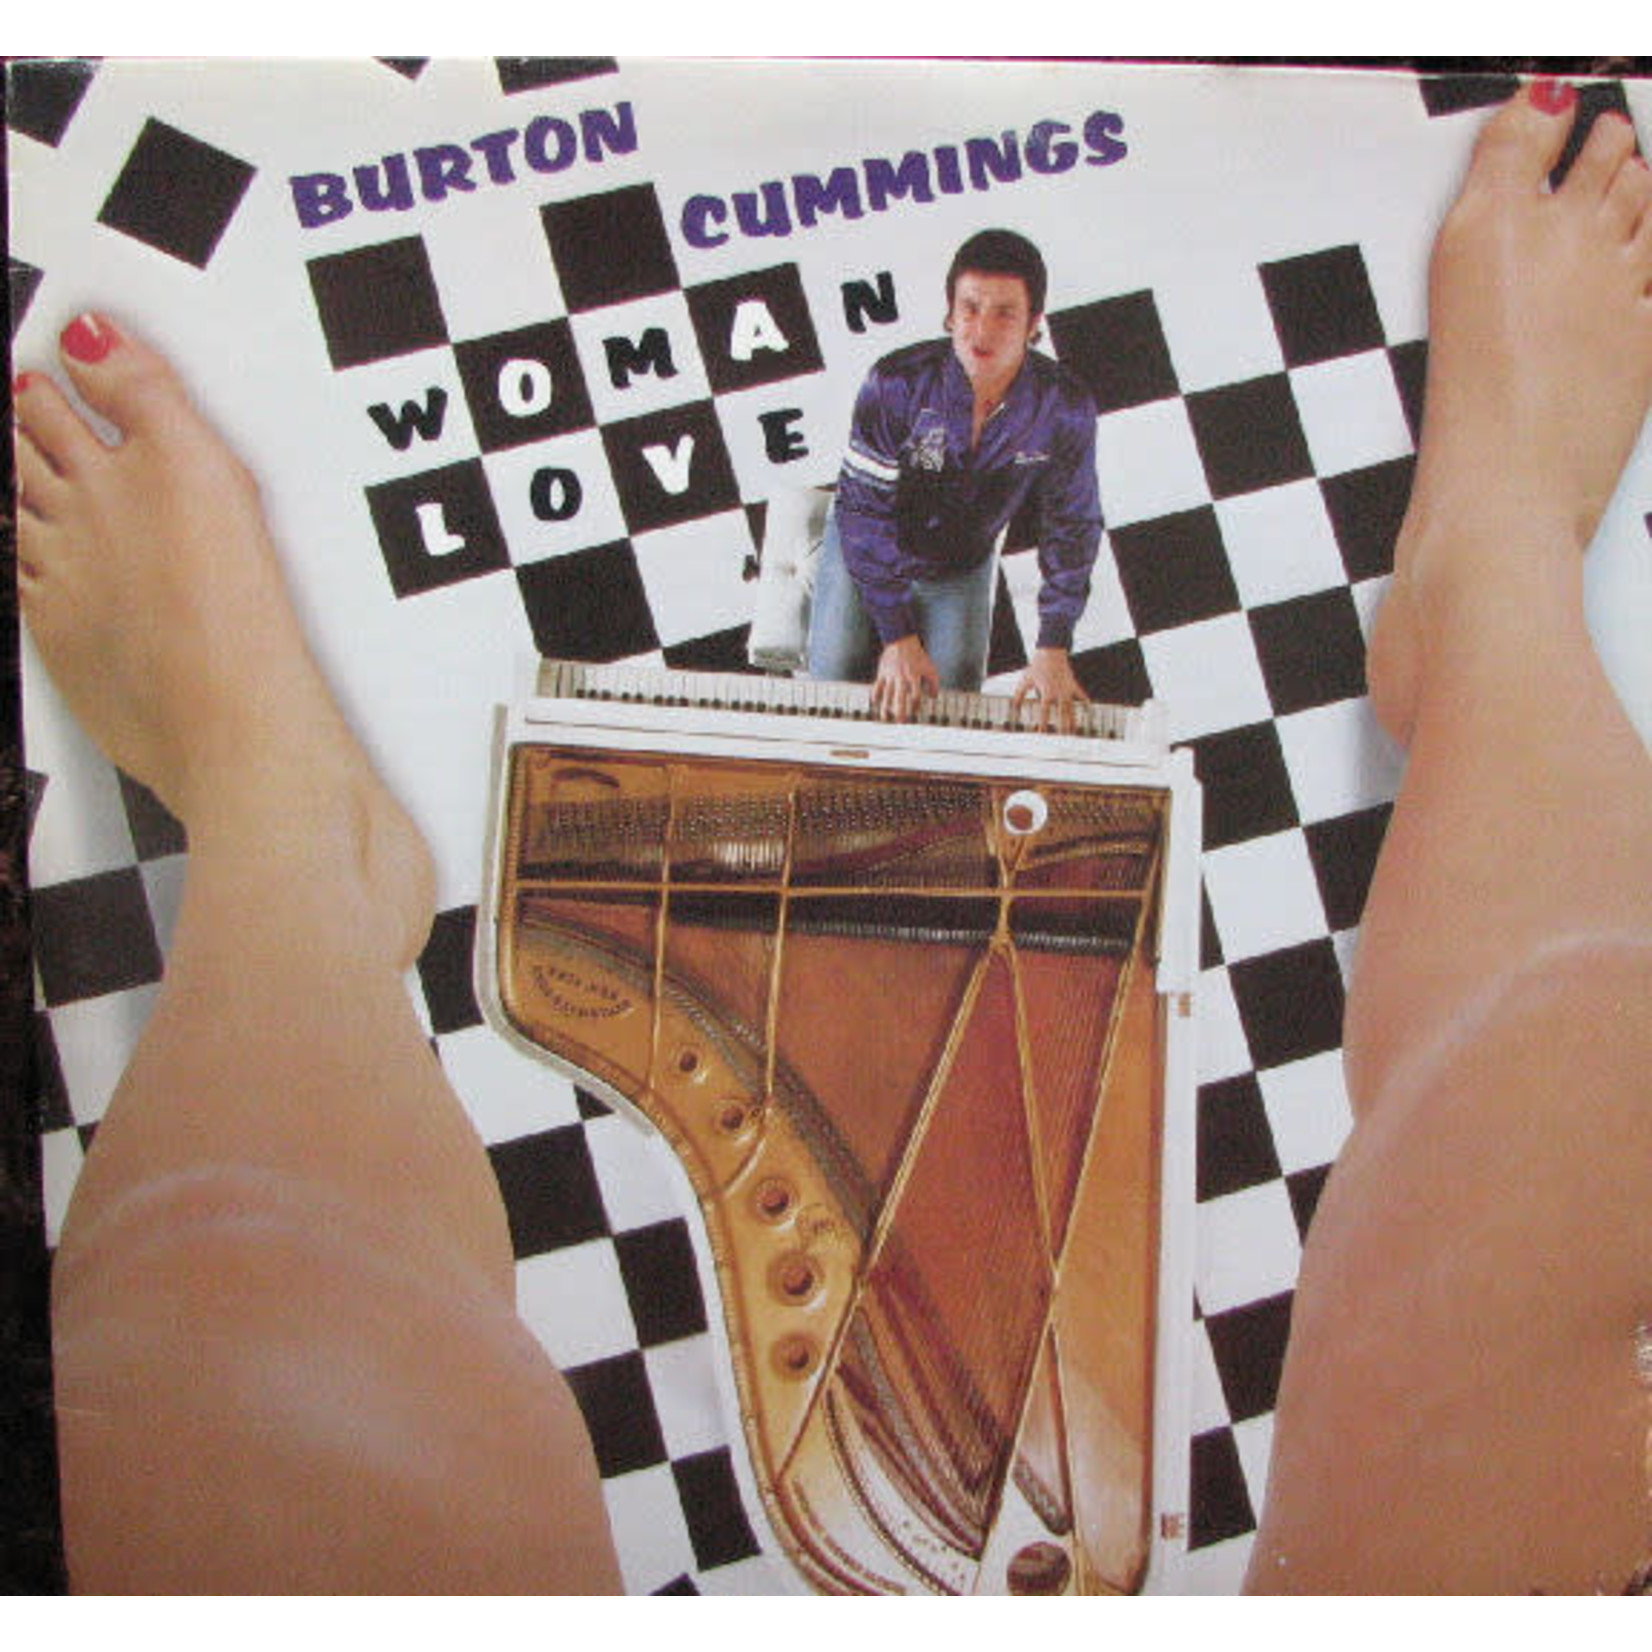 Burton Cummings Burton Cummings – Woman Love (VG, 1980, LP, Epic – XPEC 80040, Canada)